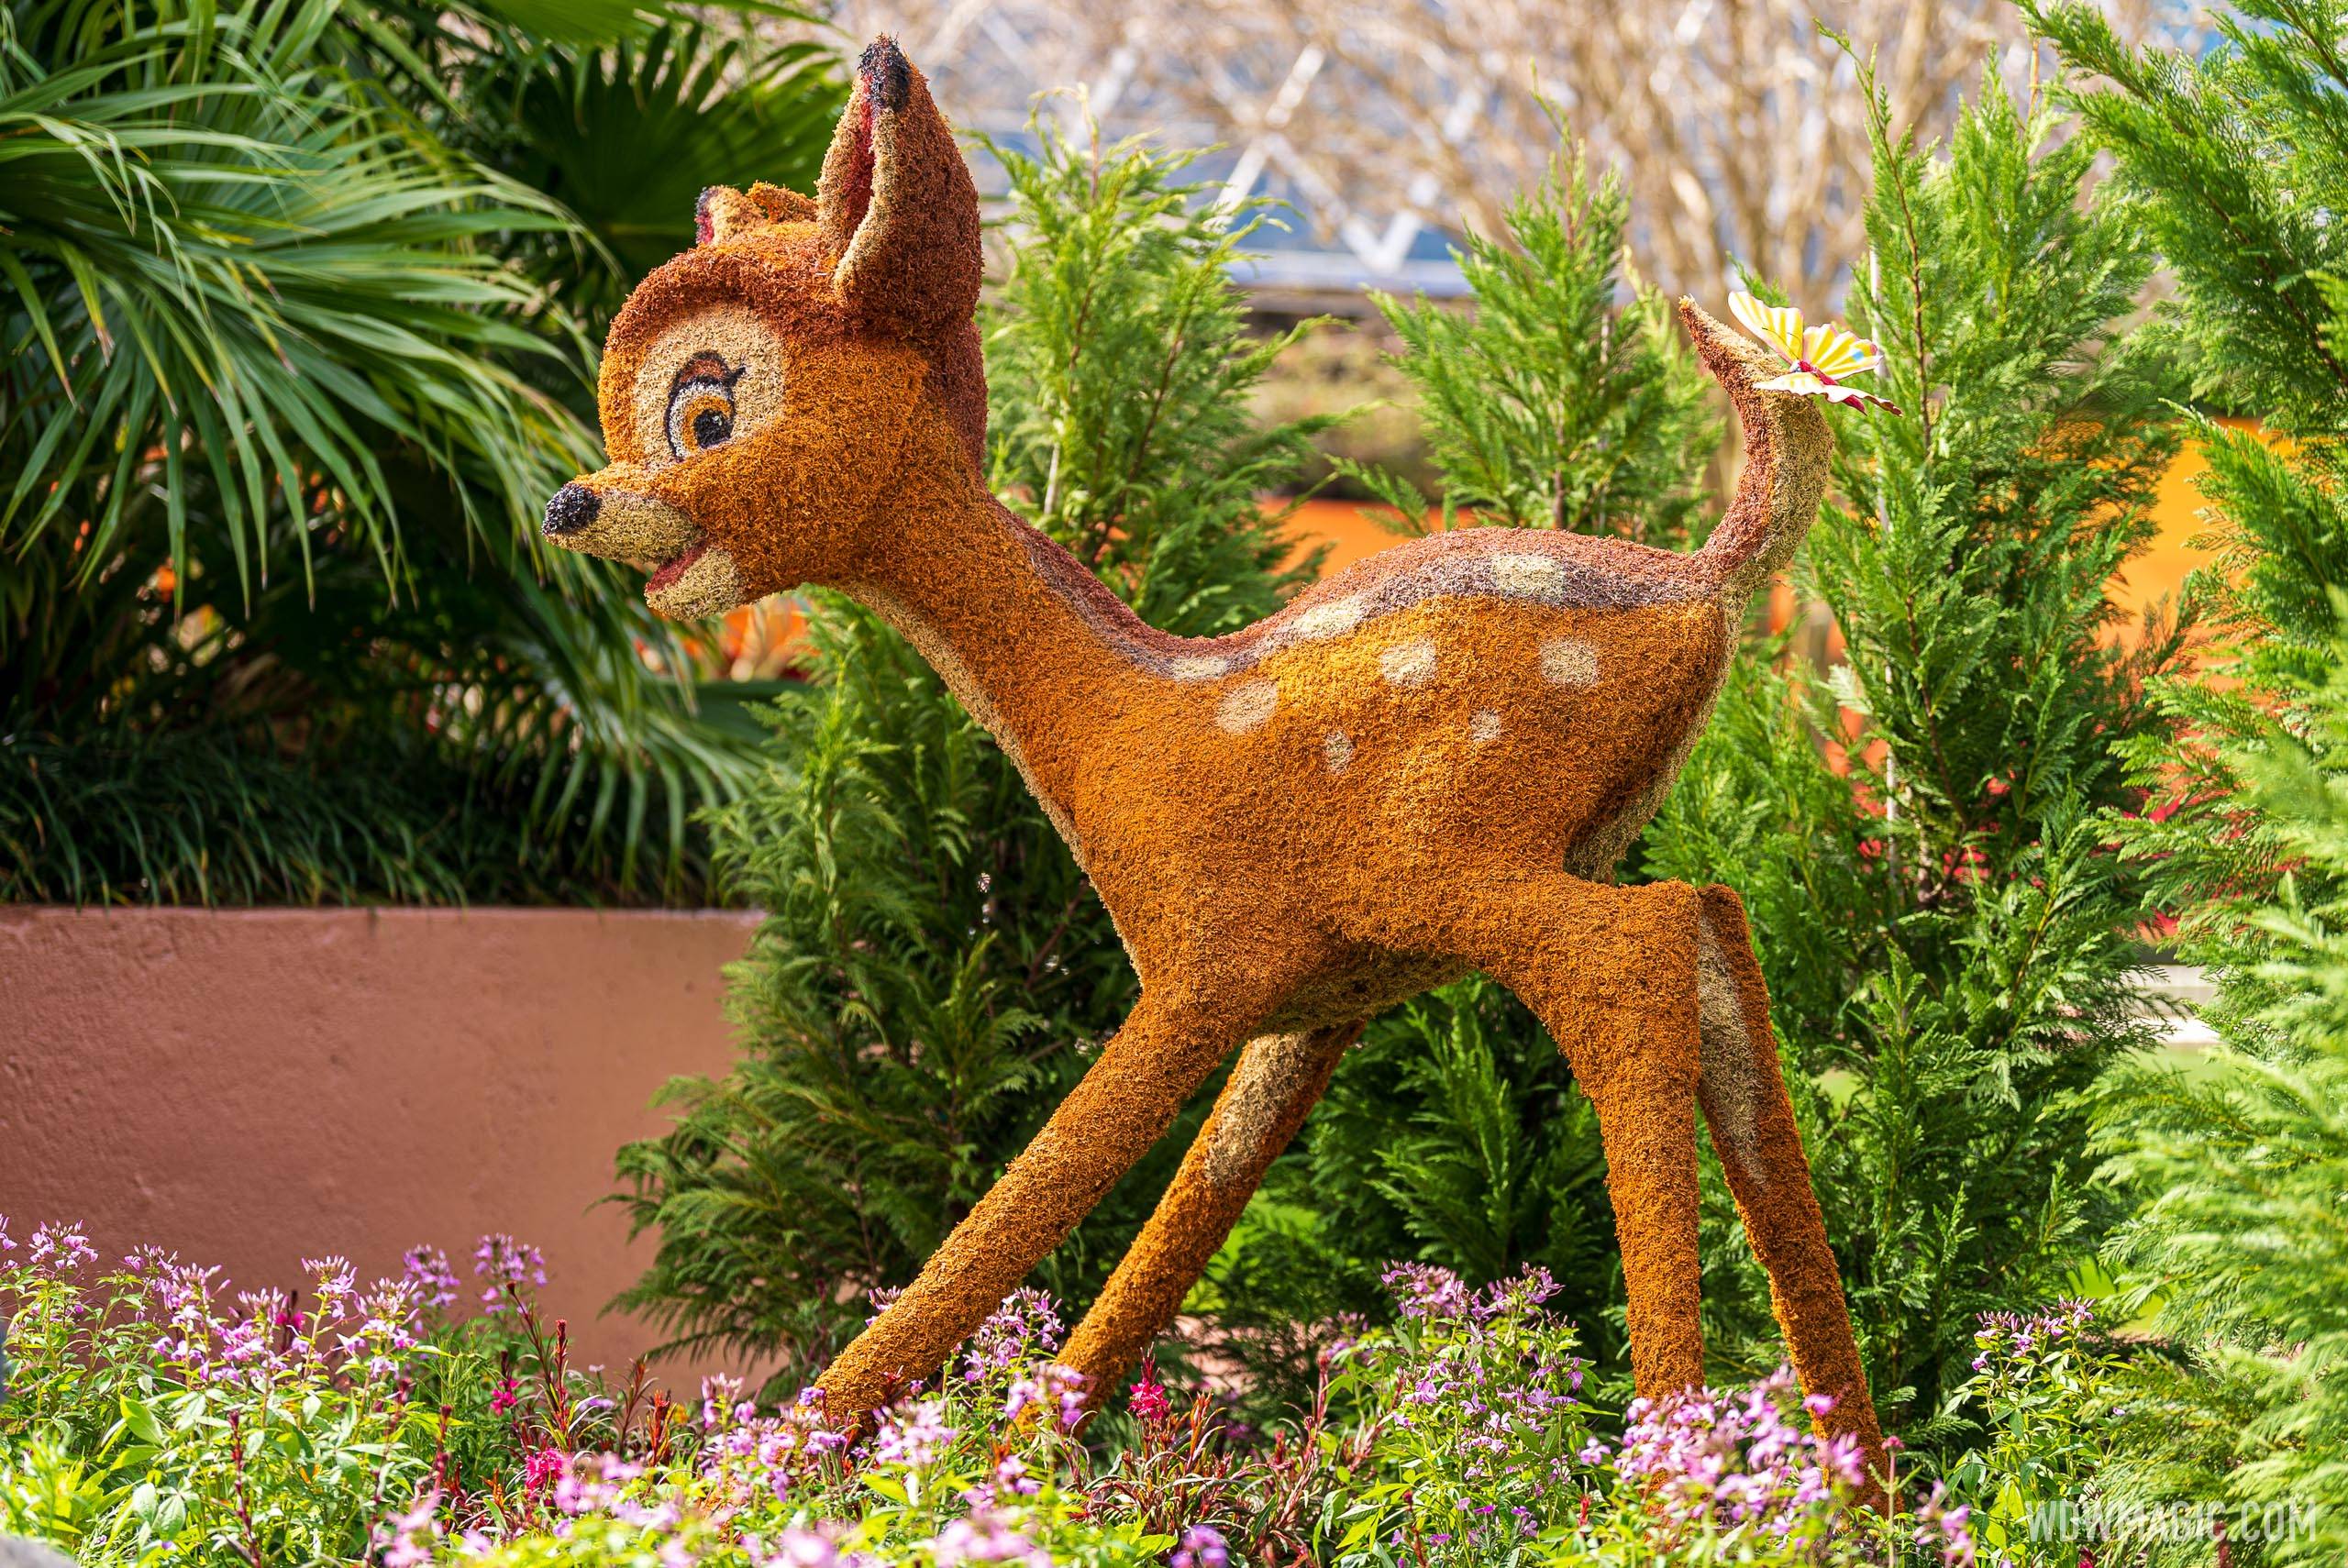 Bambi and Friends – near Imagination!